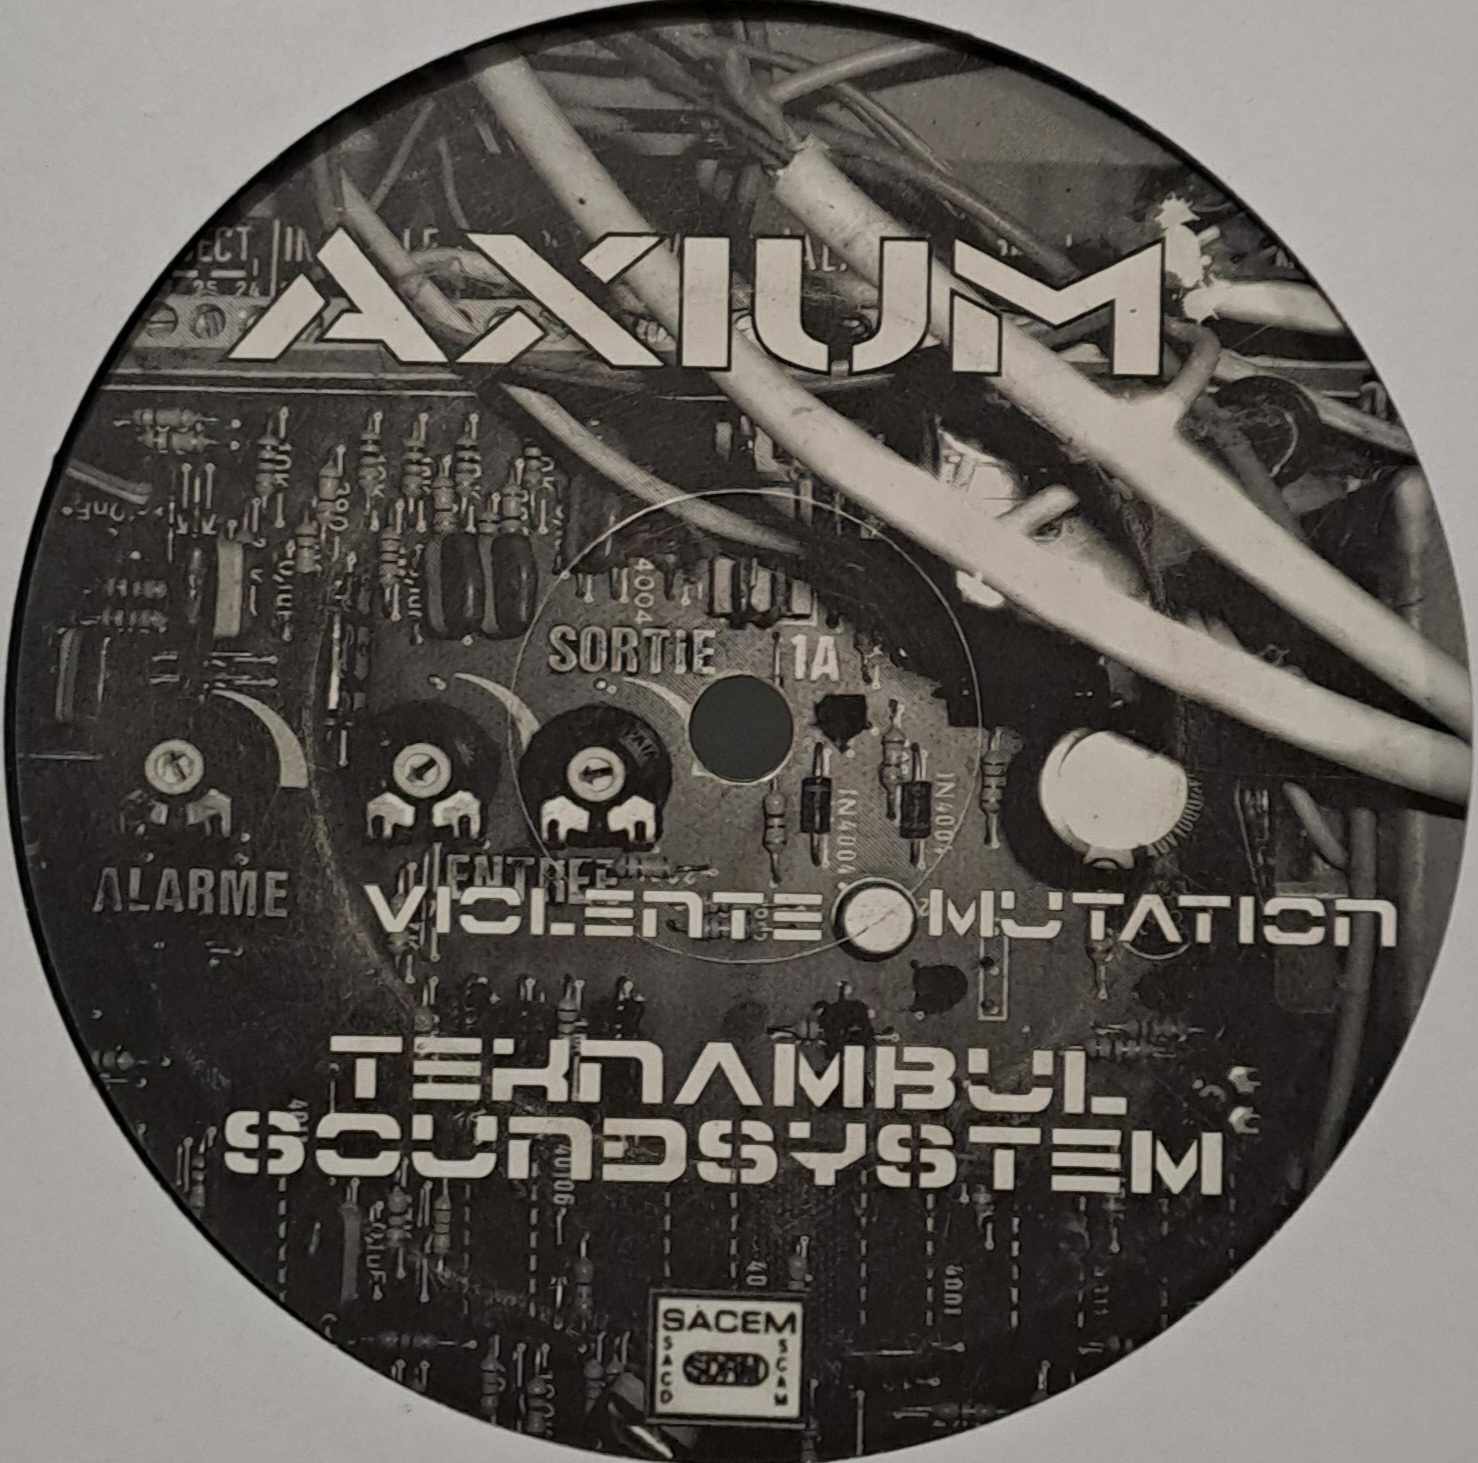 Axium 01 - vinyle freetekno